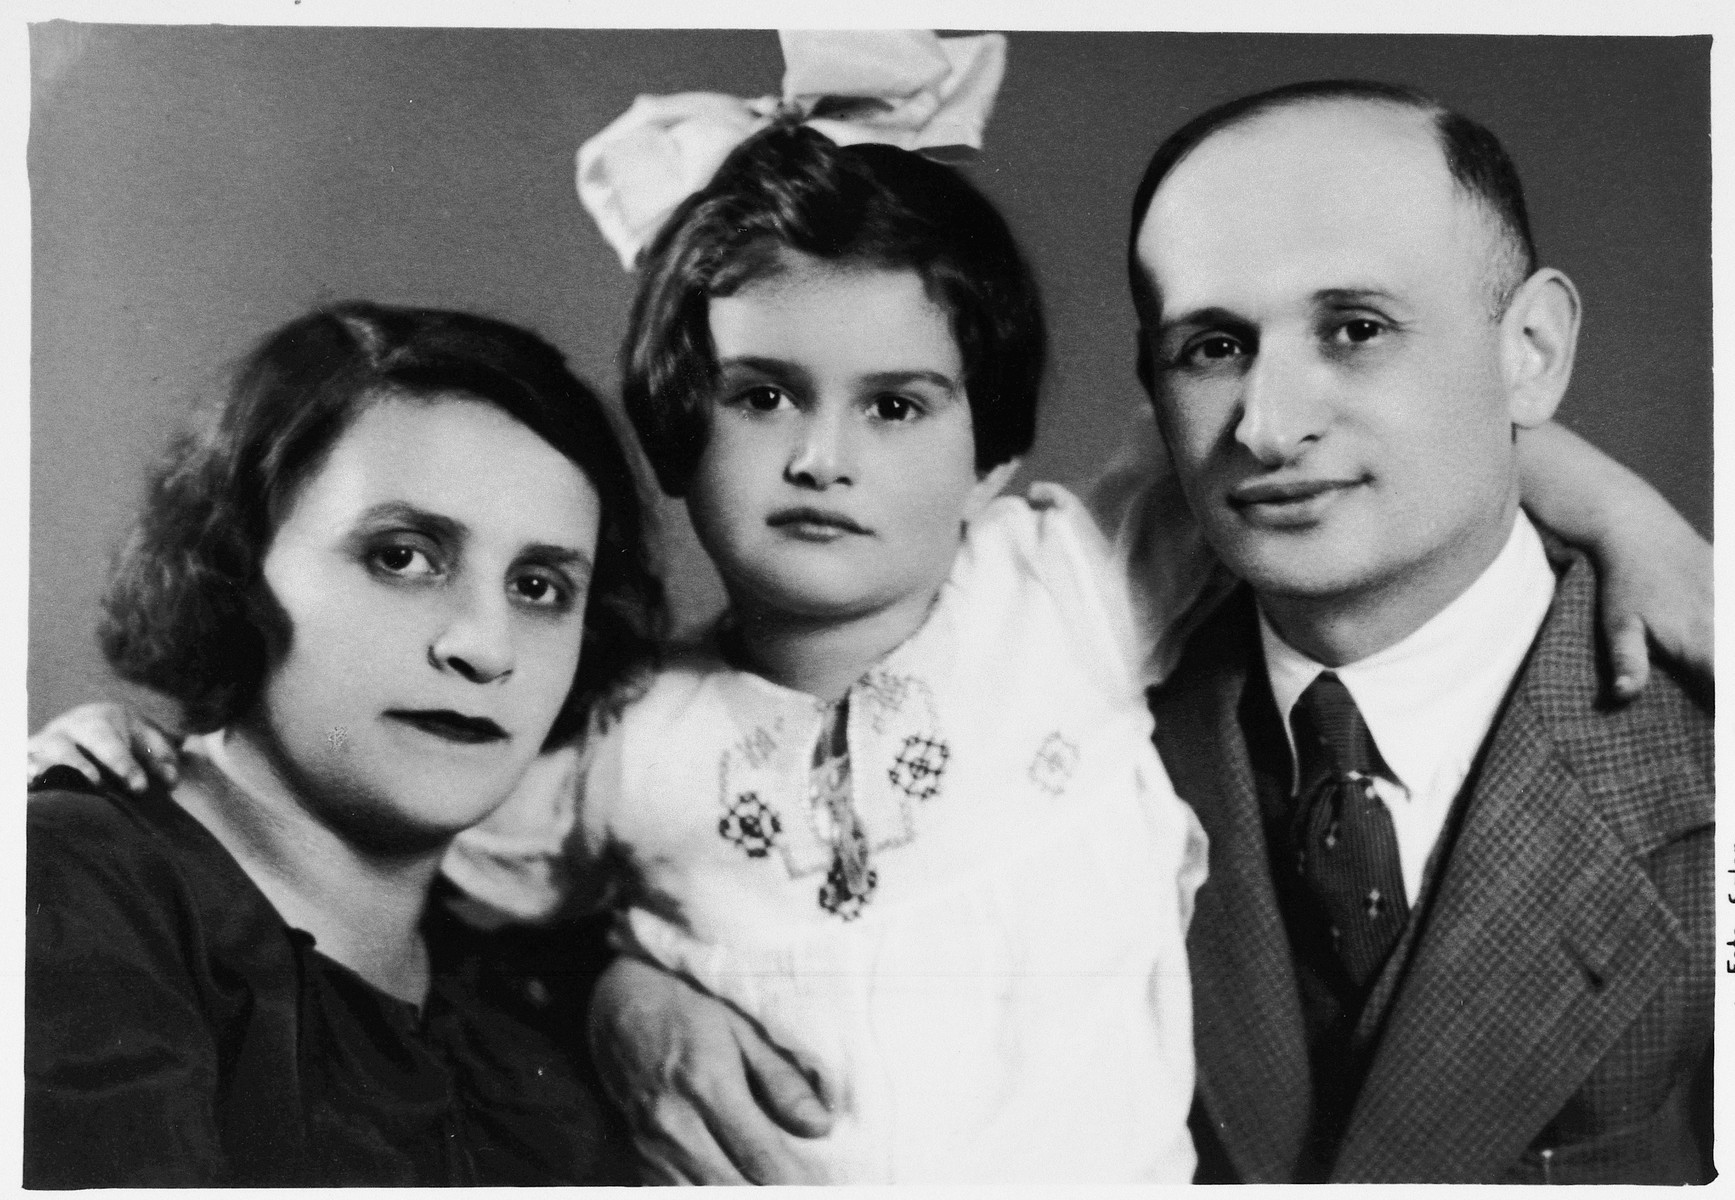 Studio portrait of the Kovarsky family in Kovno, Lithuania.

Pictured are David and Zelda (Hofmekler) Kovarsky with their daughter, Fruma.